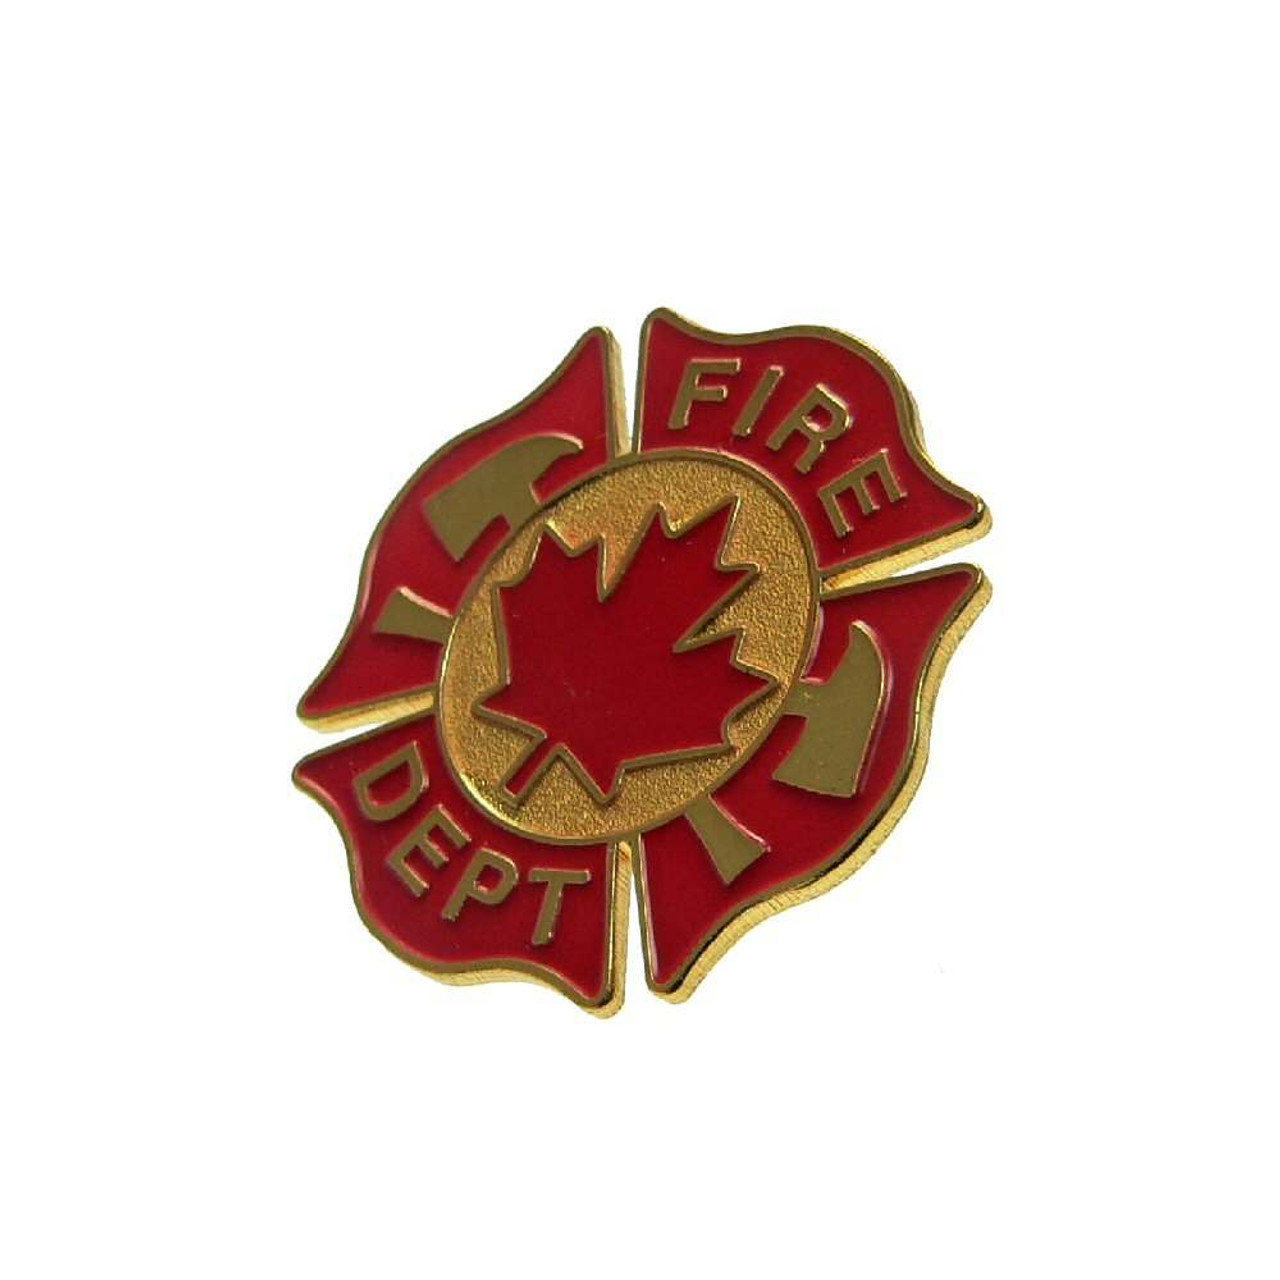 Canada Fireman Lapel Pin Canadian Firefighter Fire Department Lapel Pin